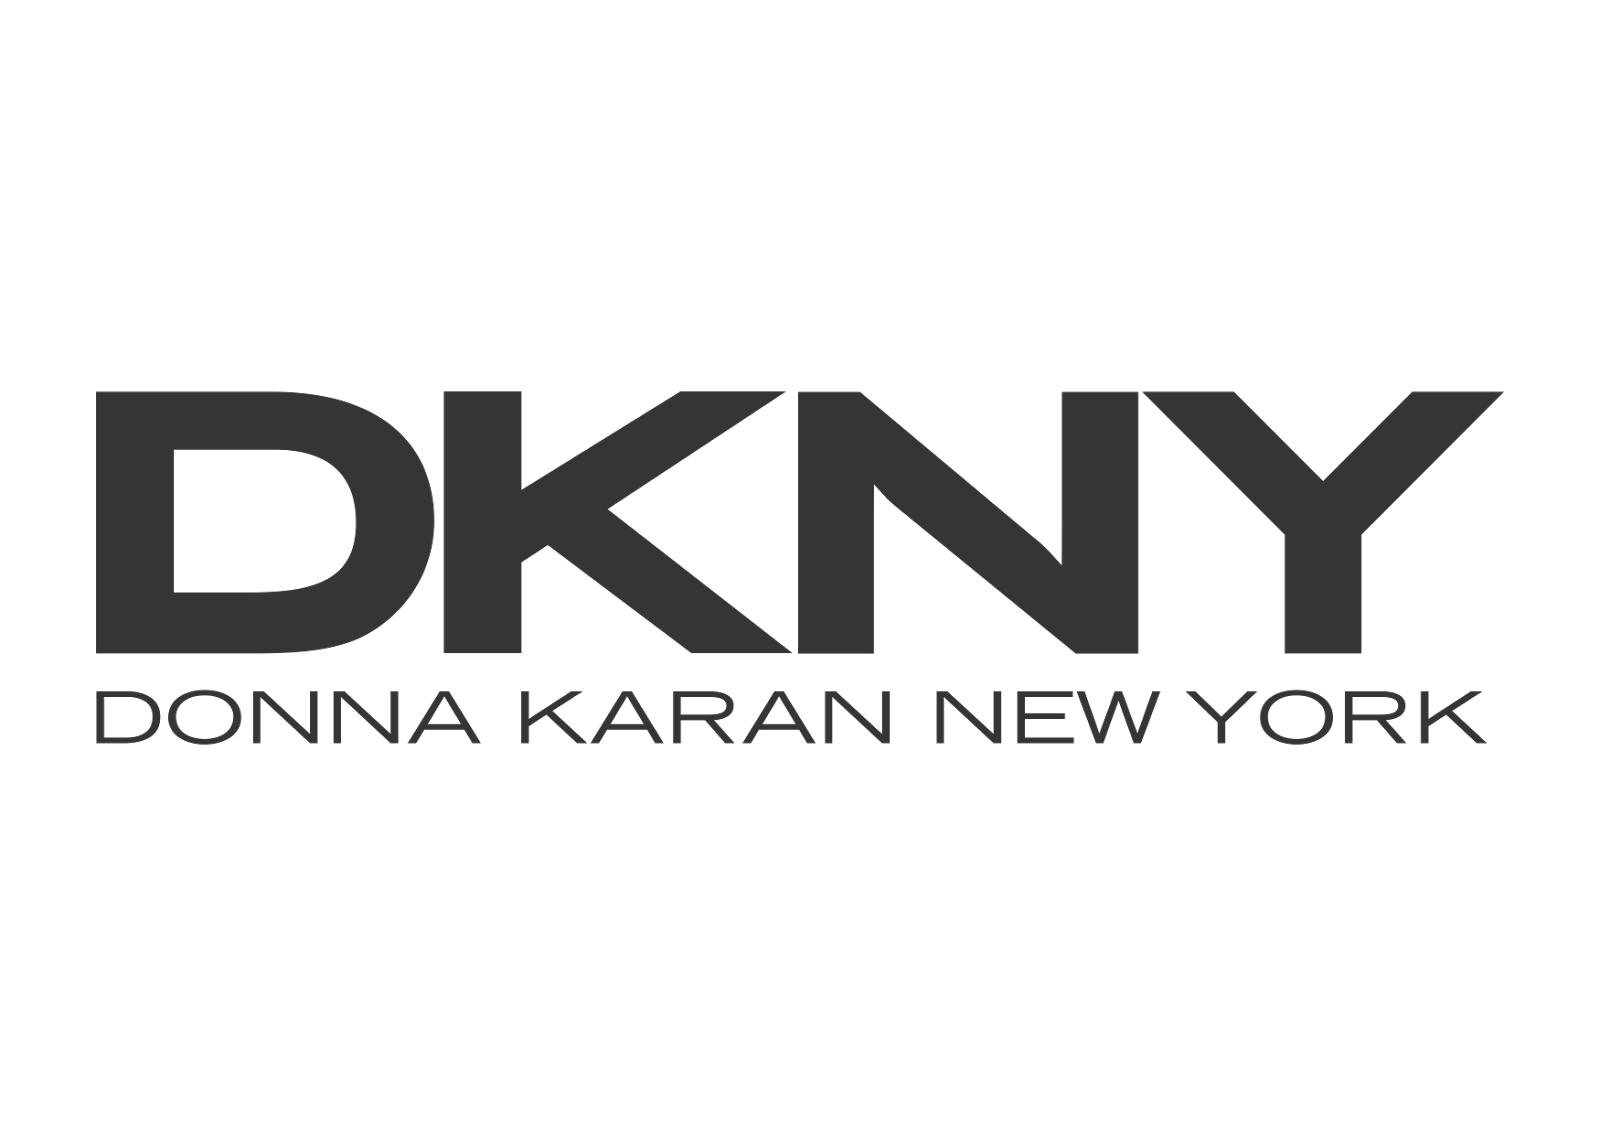 DKNY-vector-logo.png